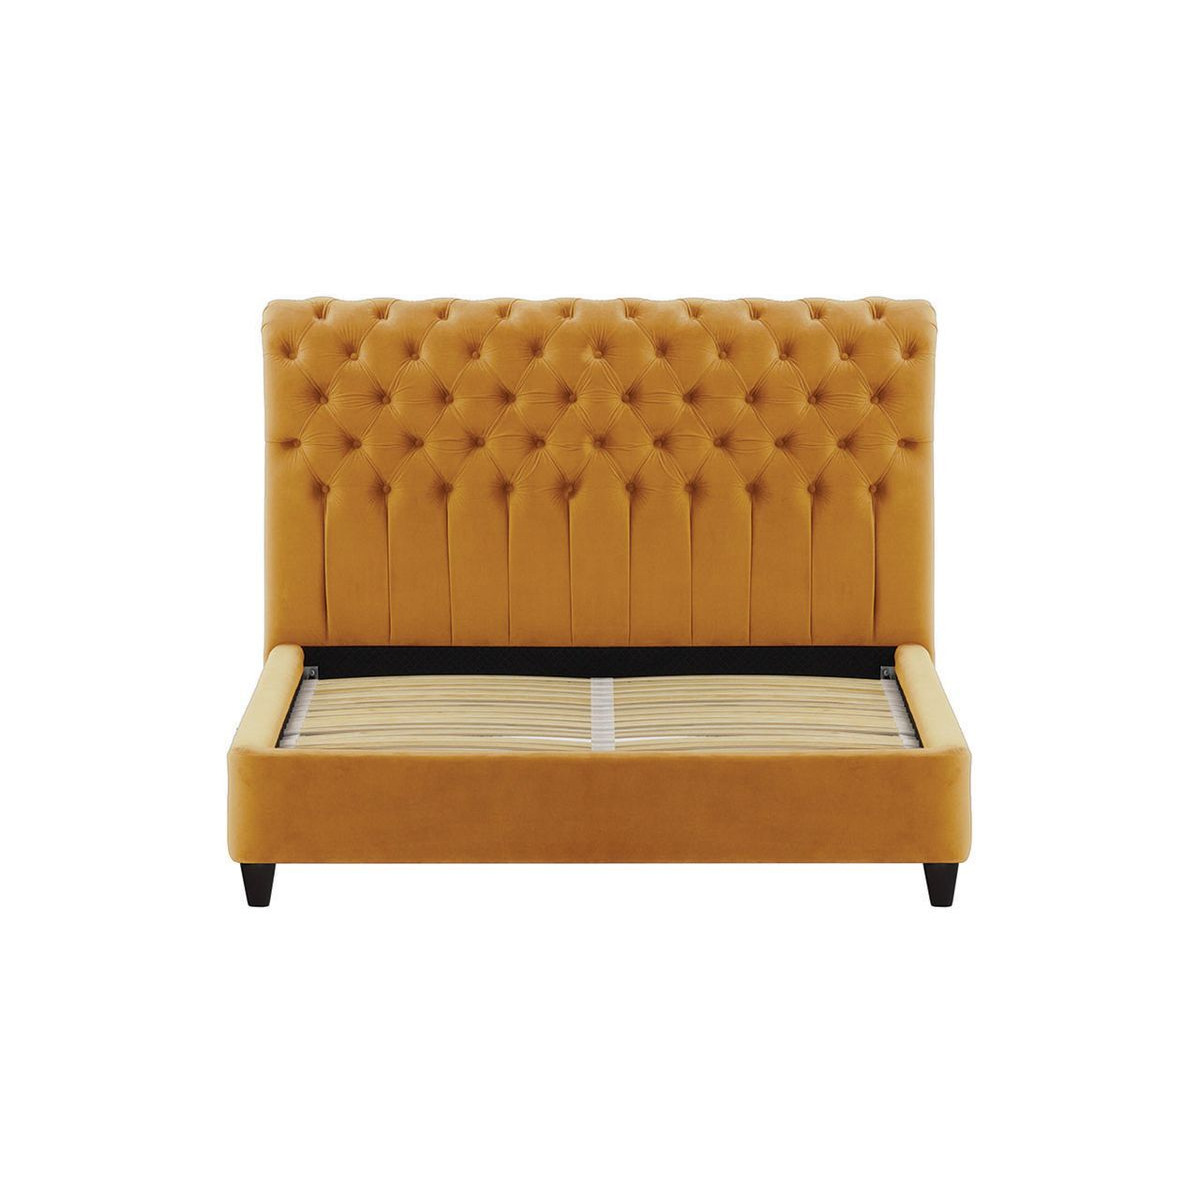 Hai Upholstered Bed Frame, mustard - image 1